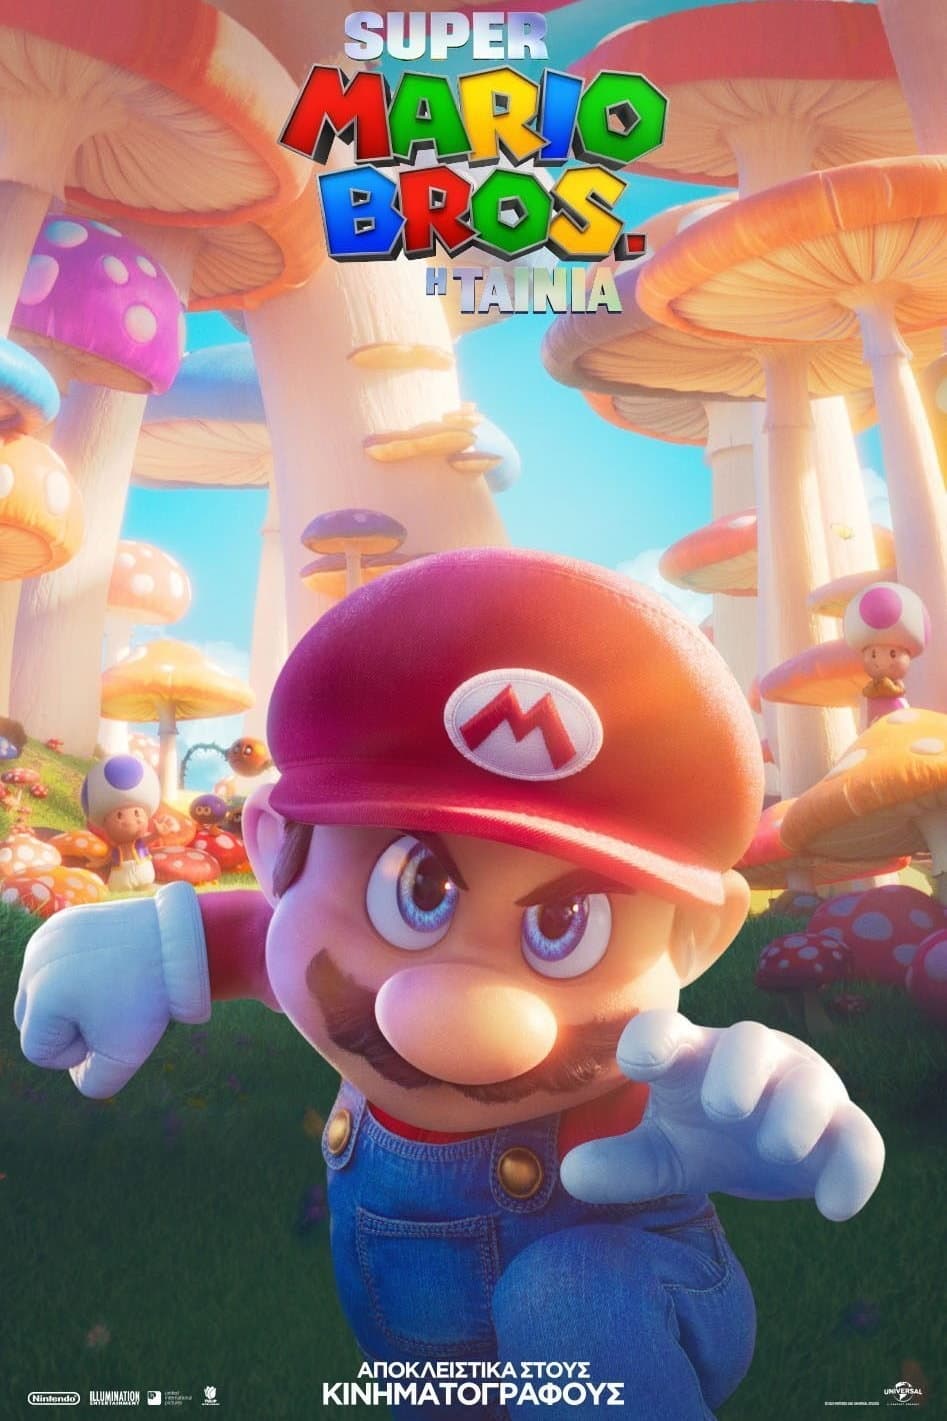 Poster for the movie "Super Mario Bros: Η Ταινία"